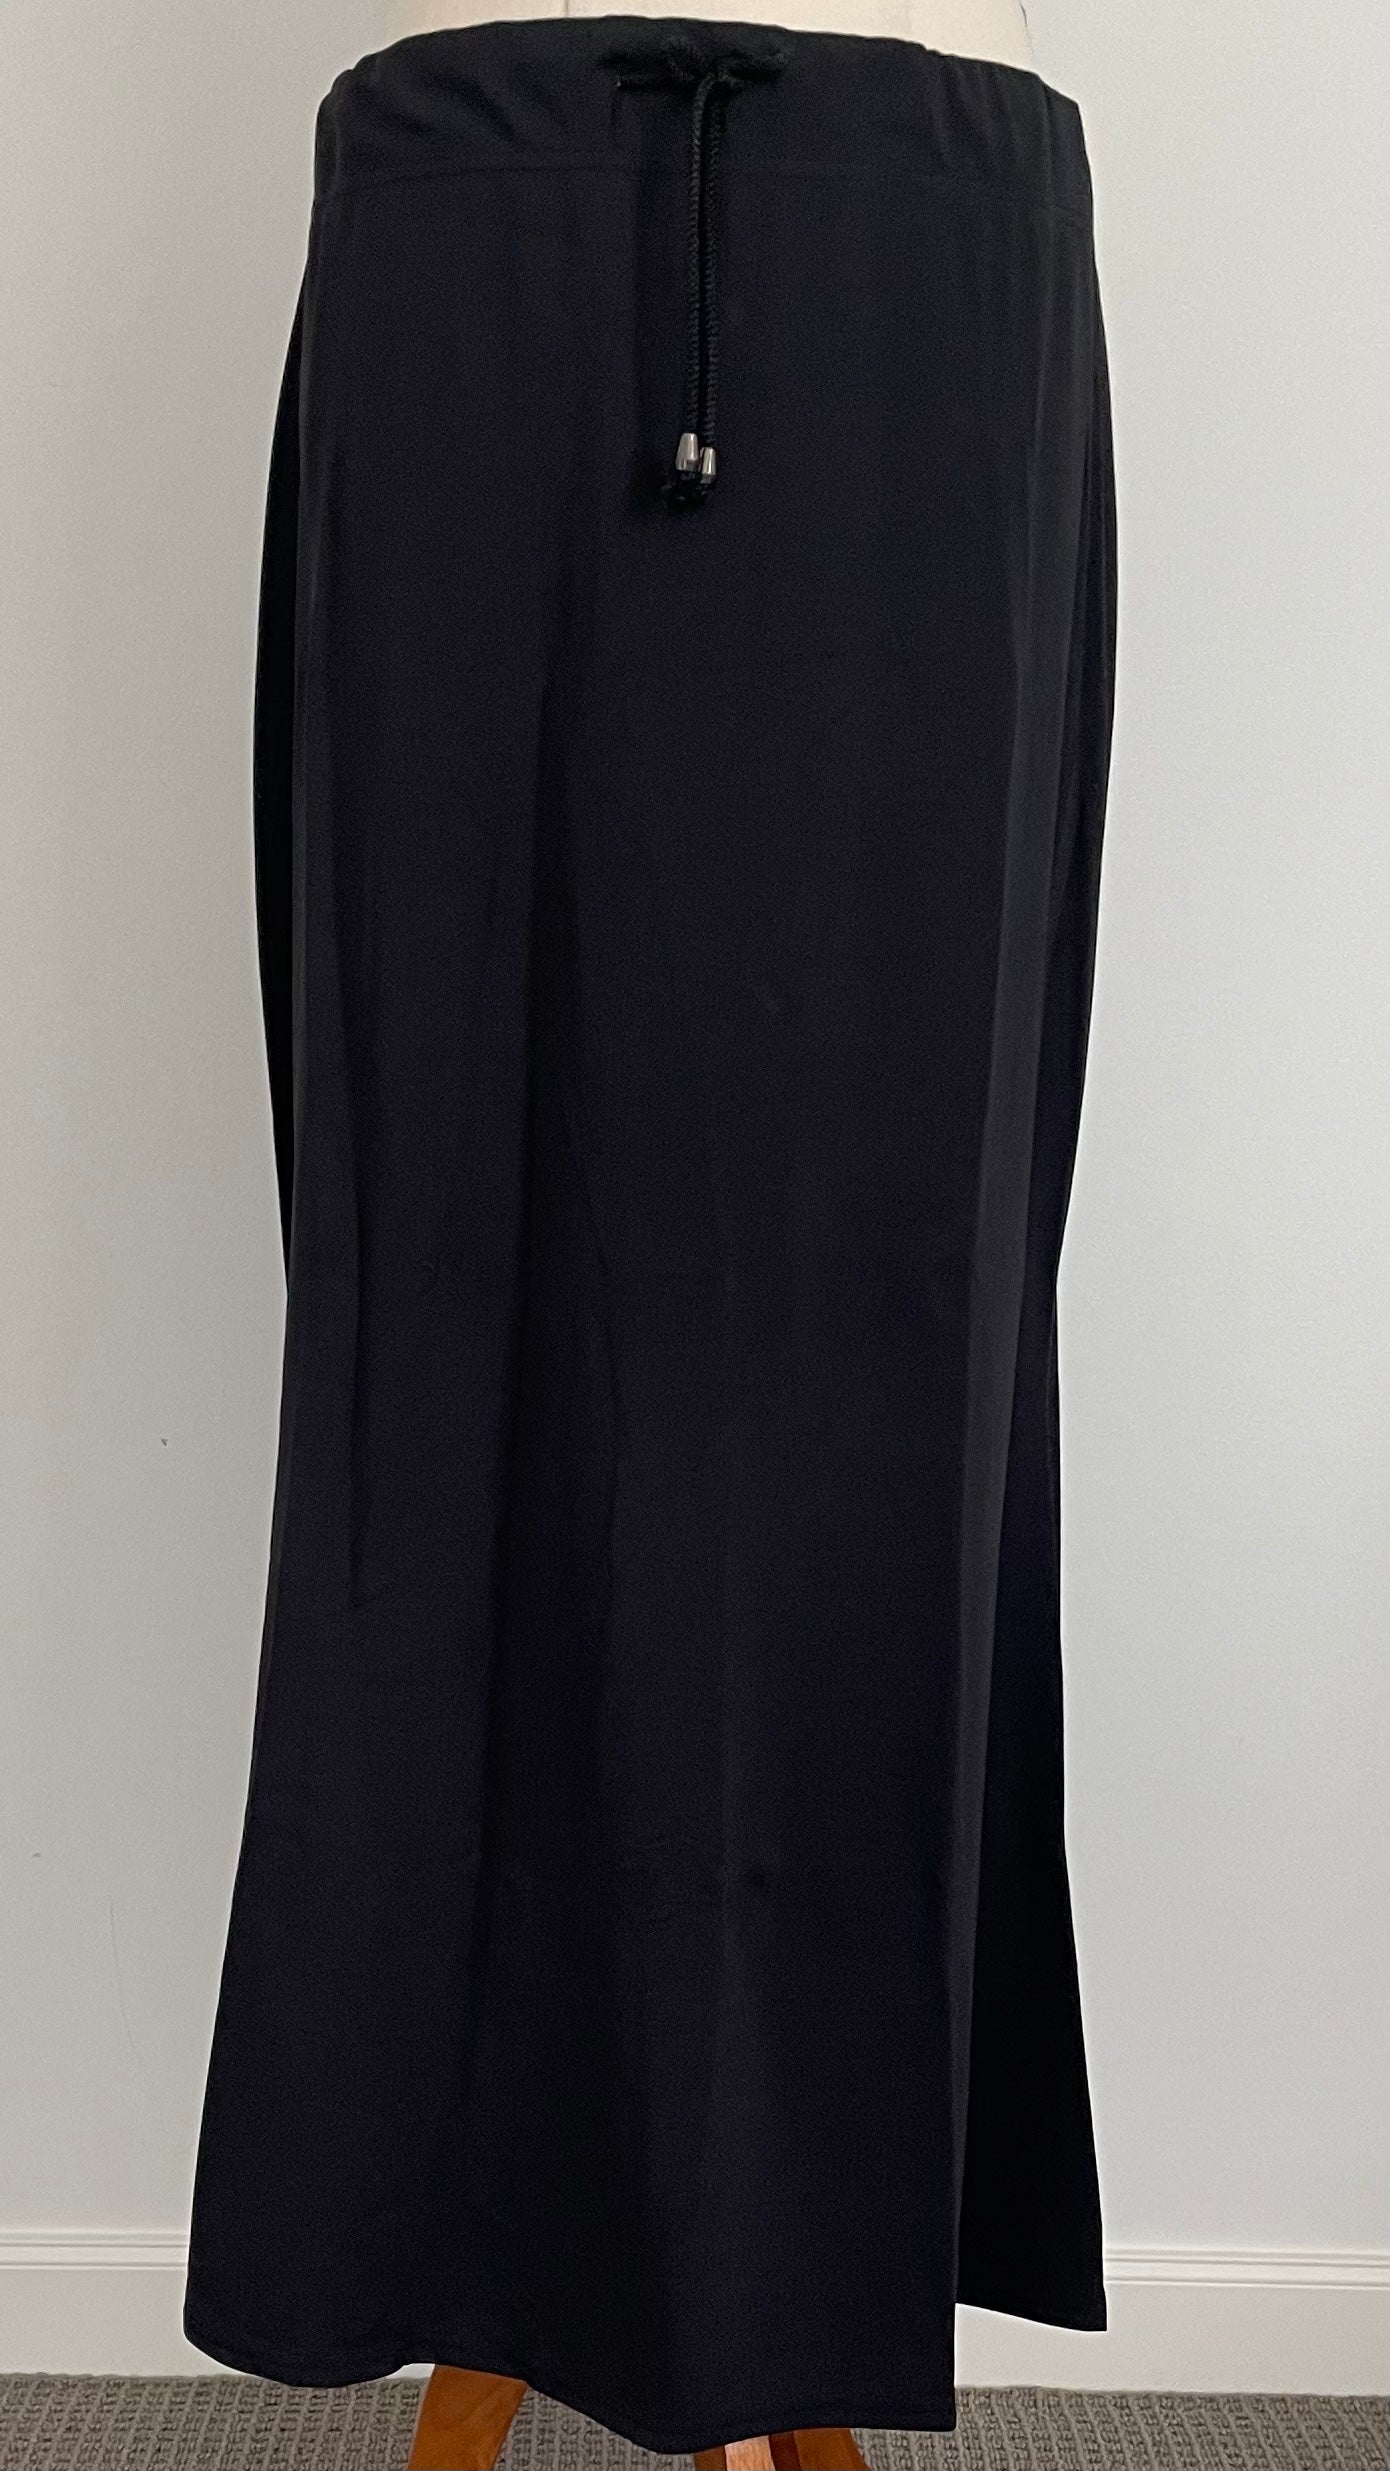 Women’s Saree Shapewear Petticoat | Saree Silhouette